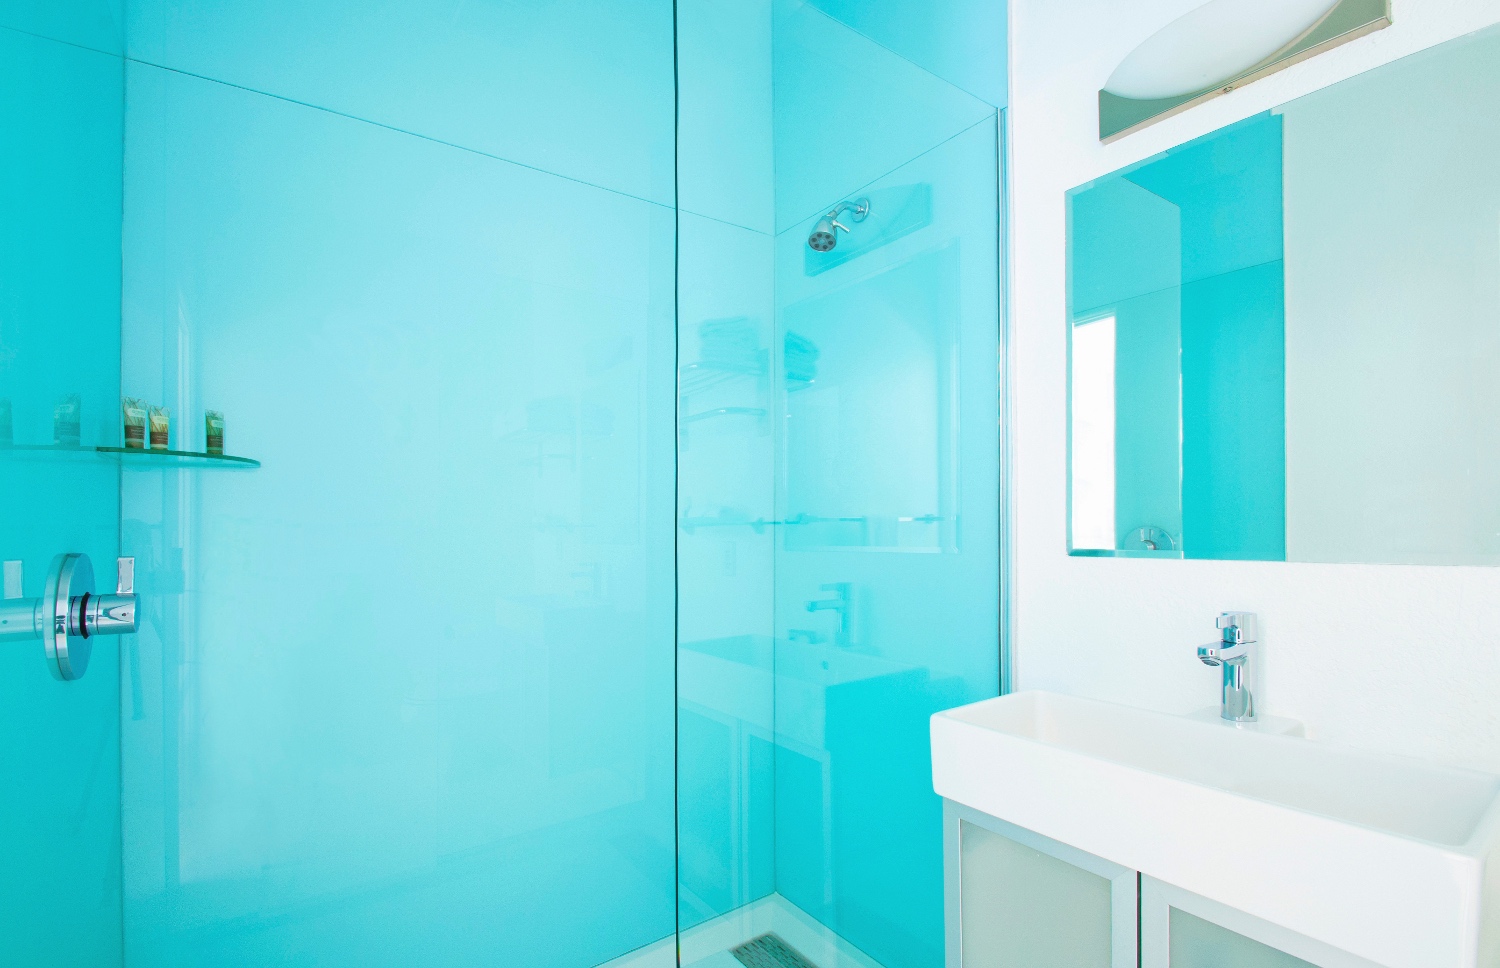 Poolside King Room Alcazar Hotel-Bathroom sink and shower